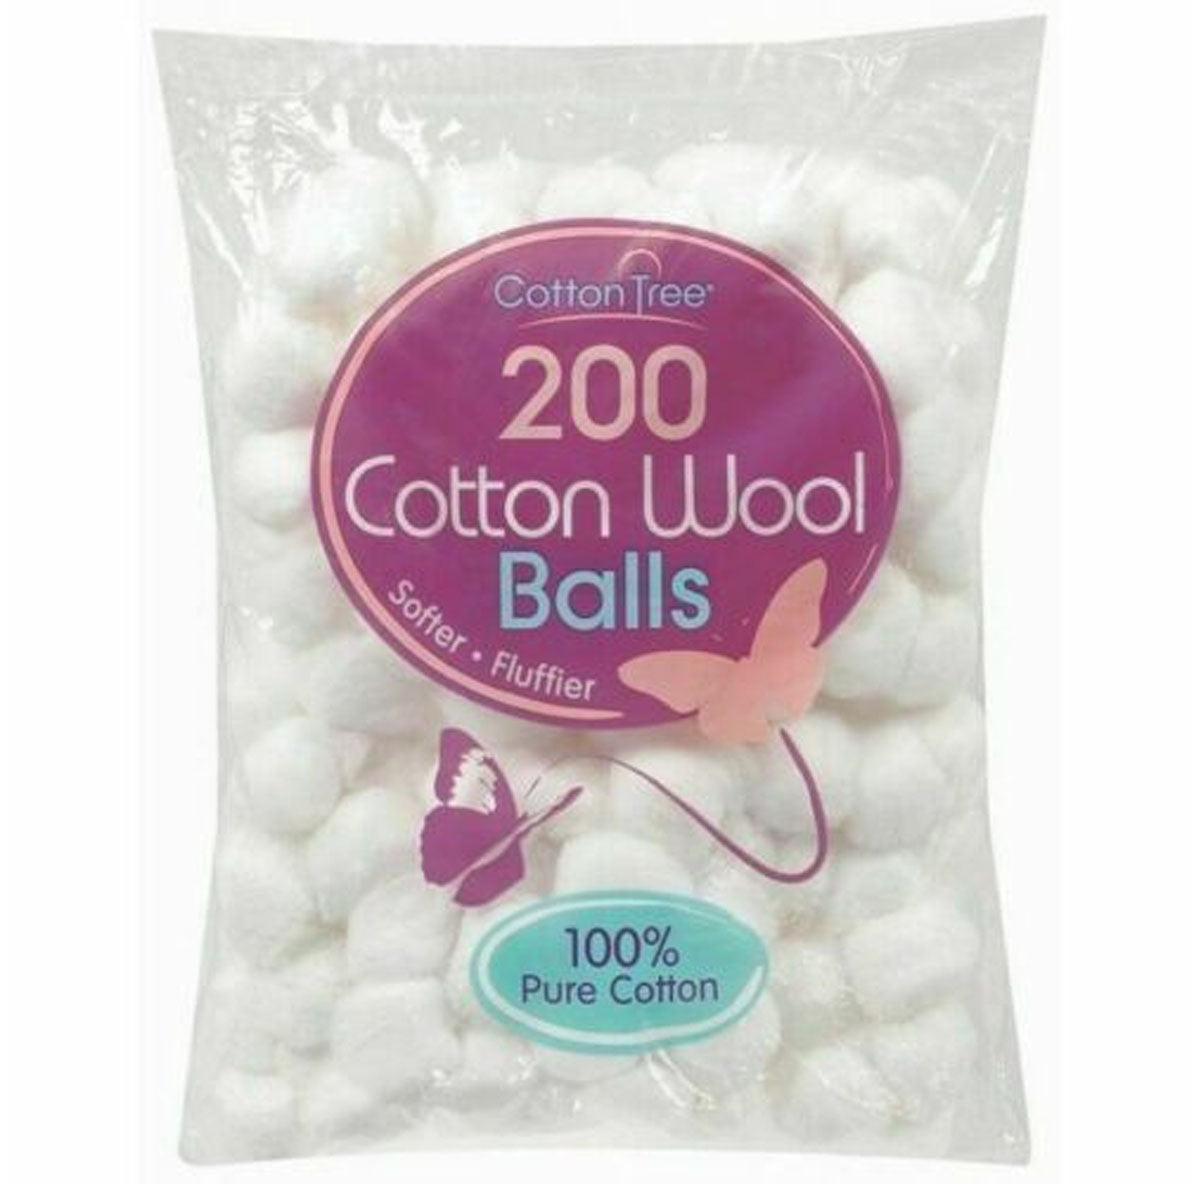 Cotton Tree - Cotton Wool Balls  - 200 pcs - Continental Food Store